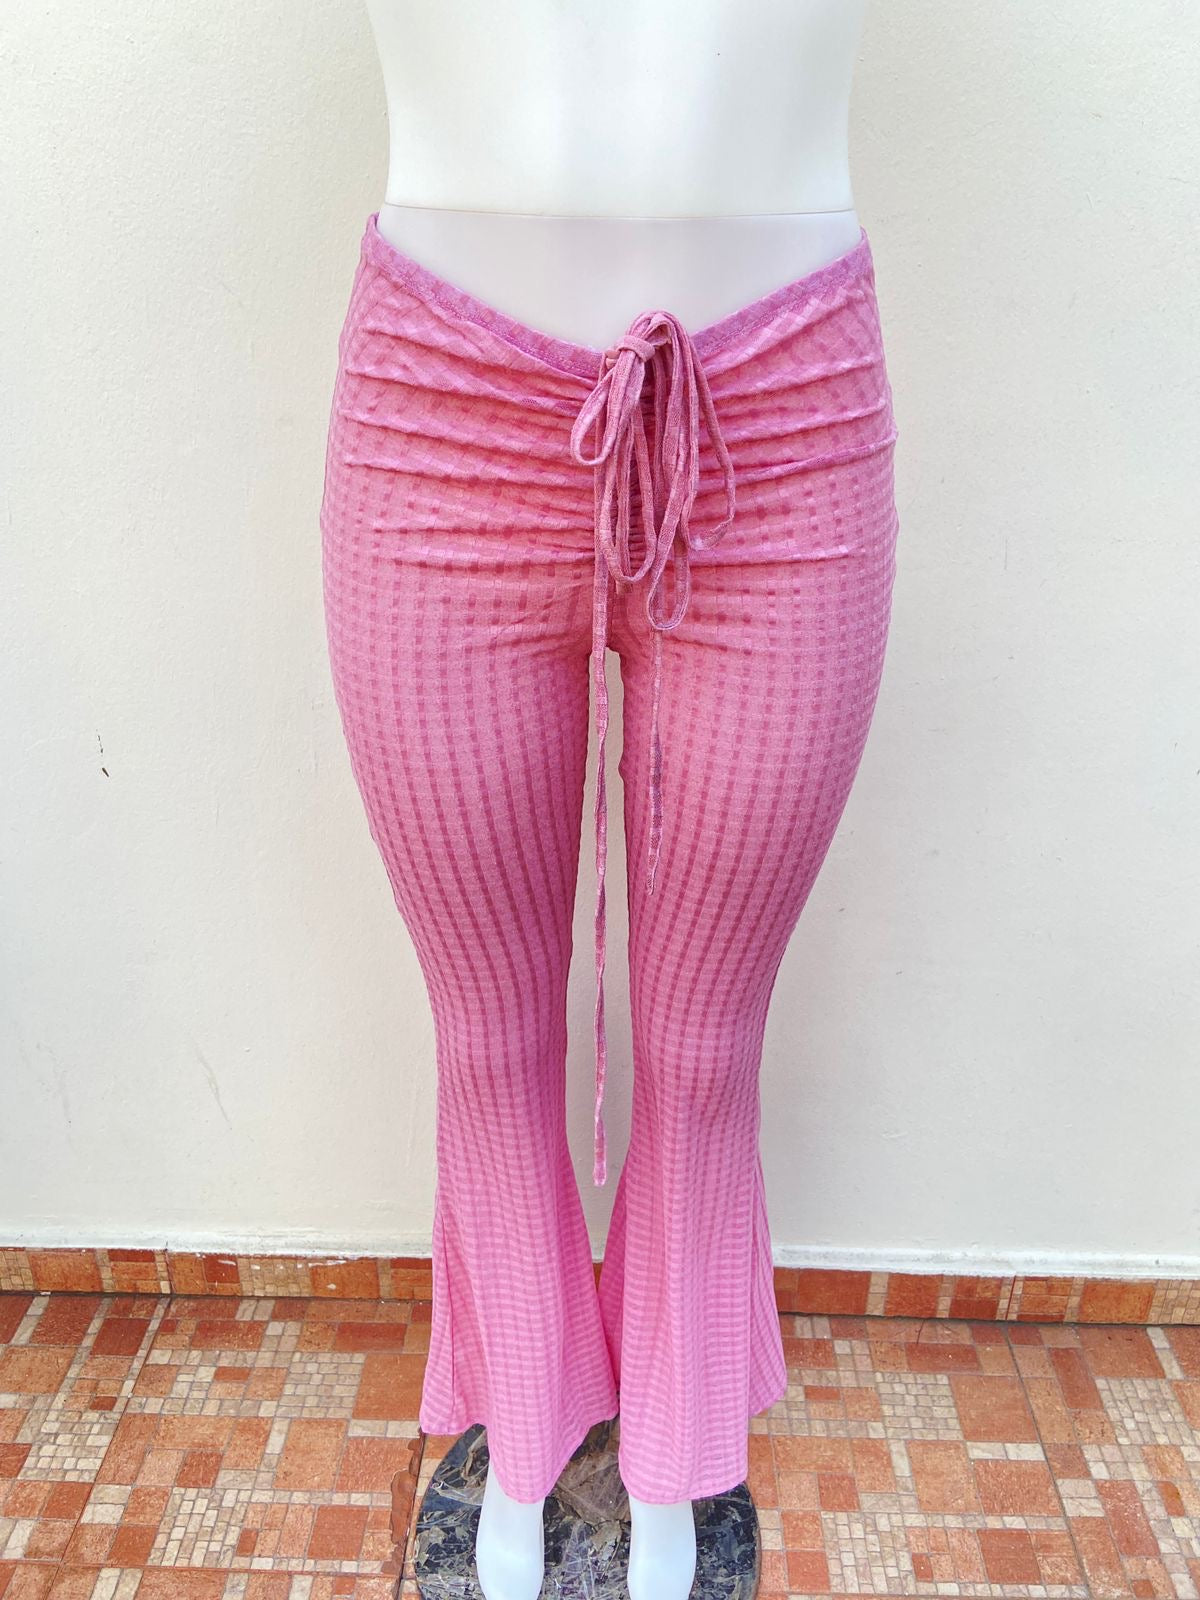 Pantalón Fashion Nova Original, color rosa ,con tiros ajustables y tela transparente